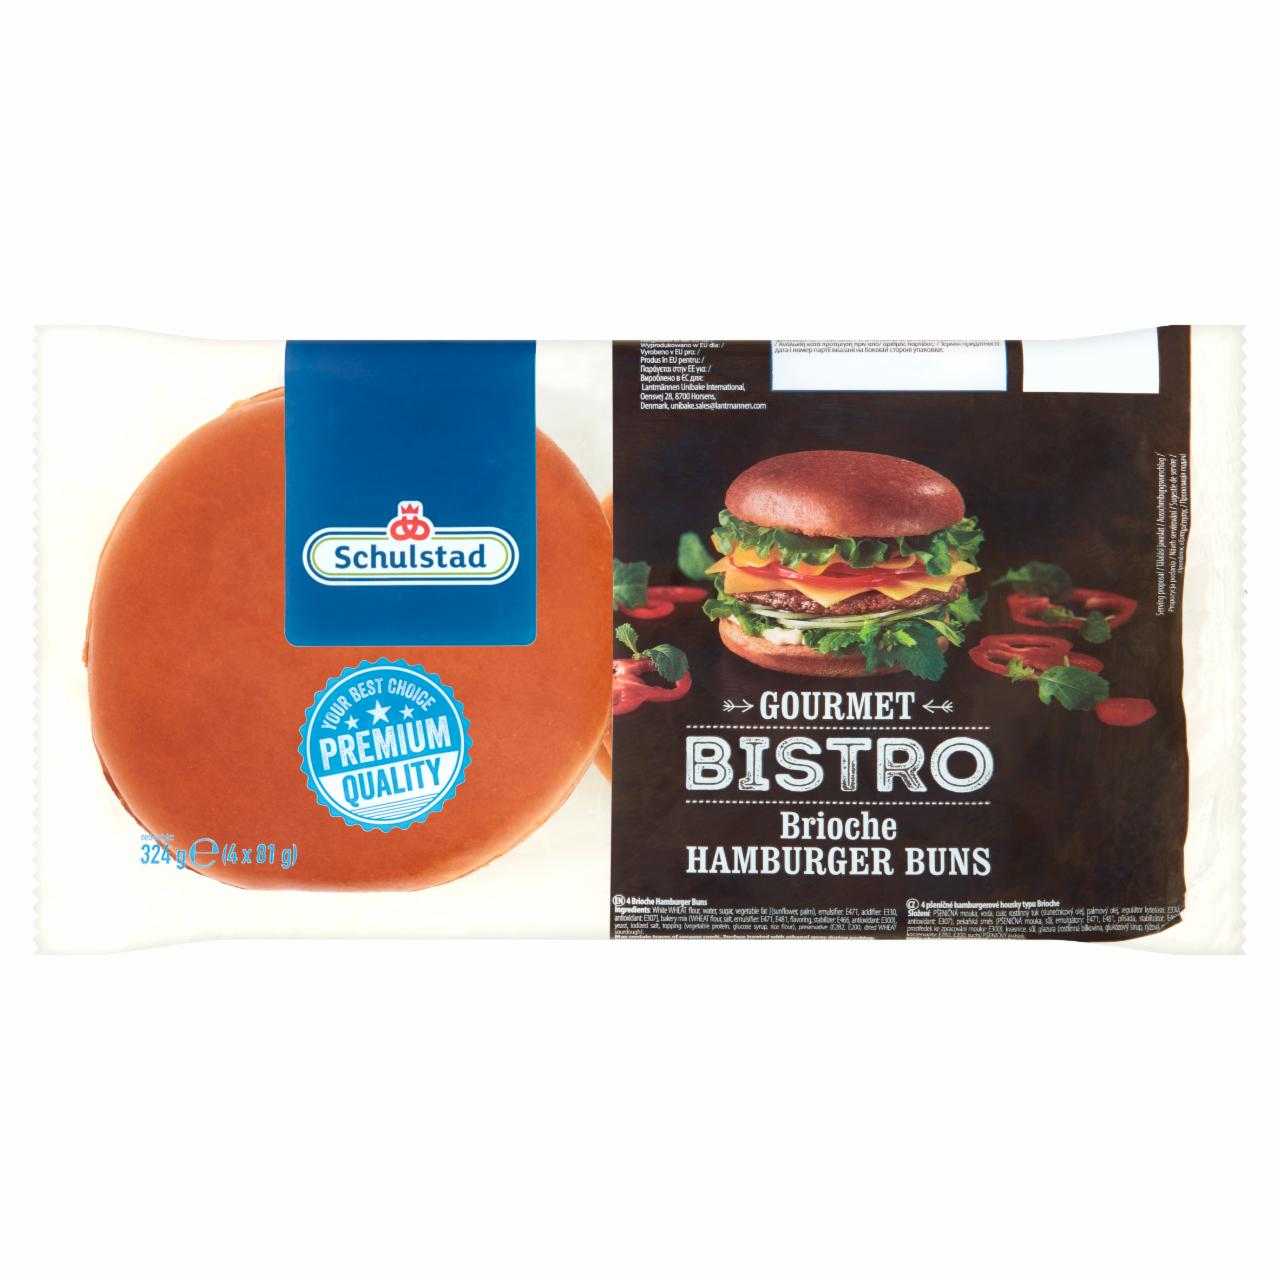 Zdjęcia - Schulstad Gourmet Bistro Bułki pszenne typu Brioche do hamburgera 324 g (4 x 81 g)